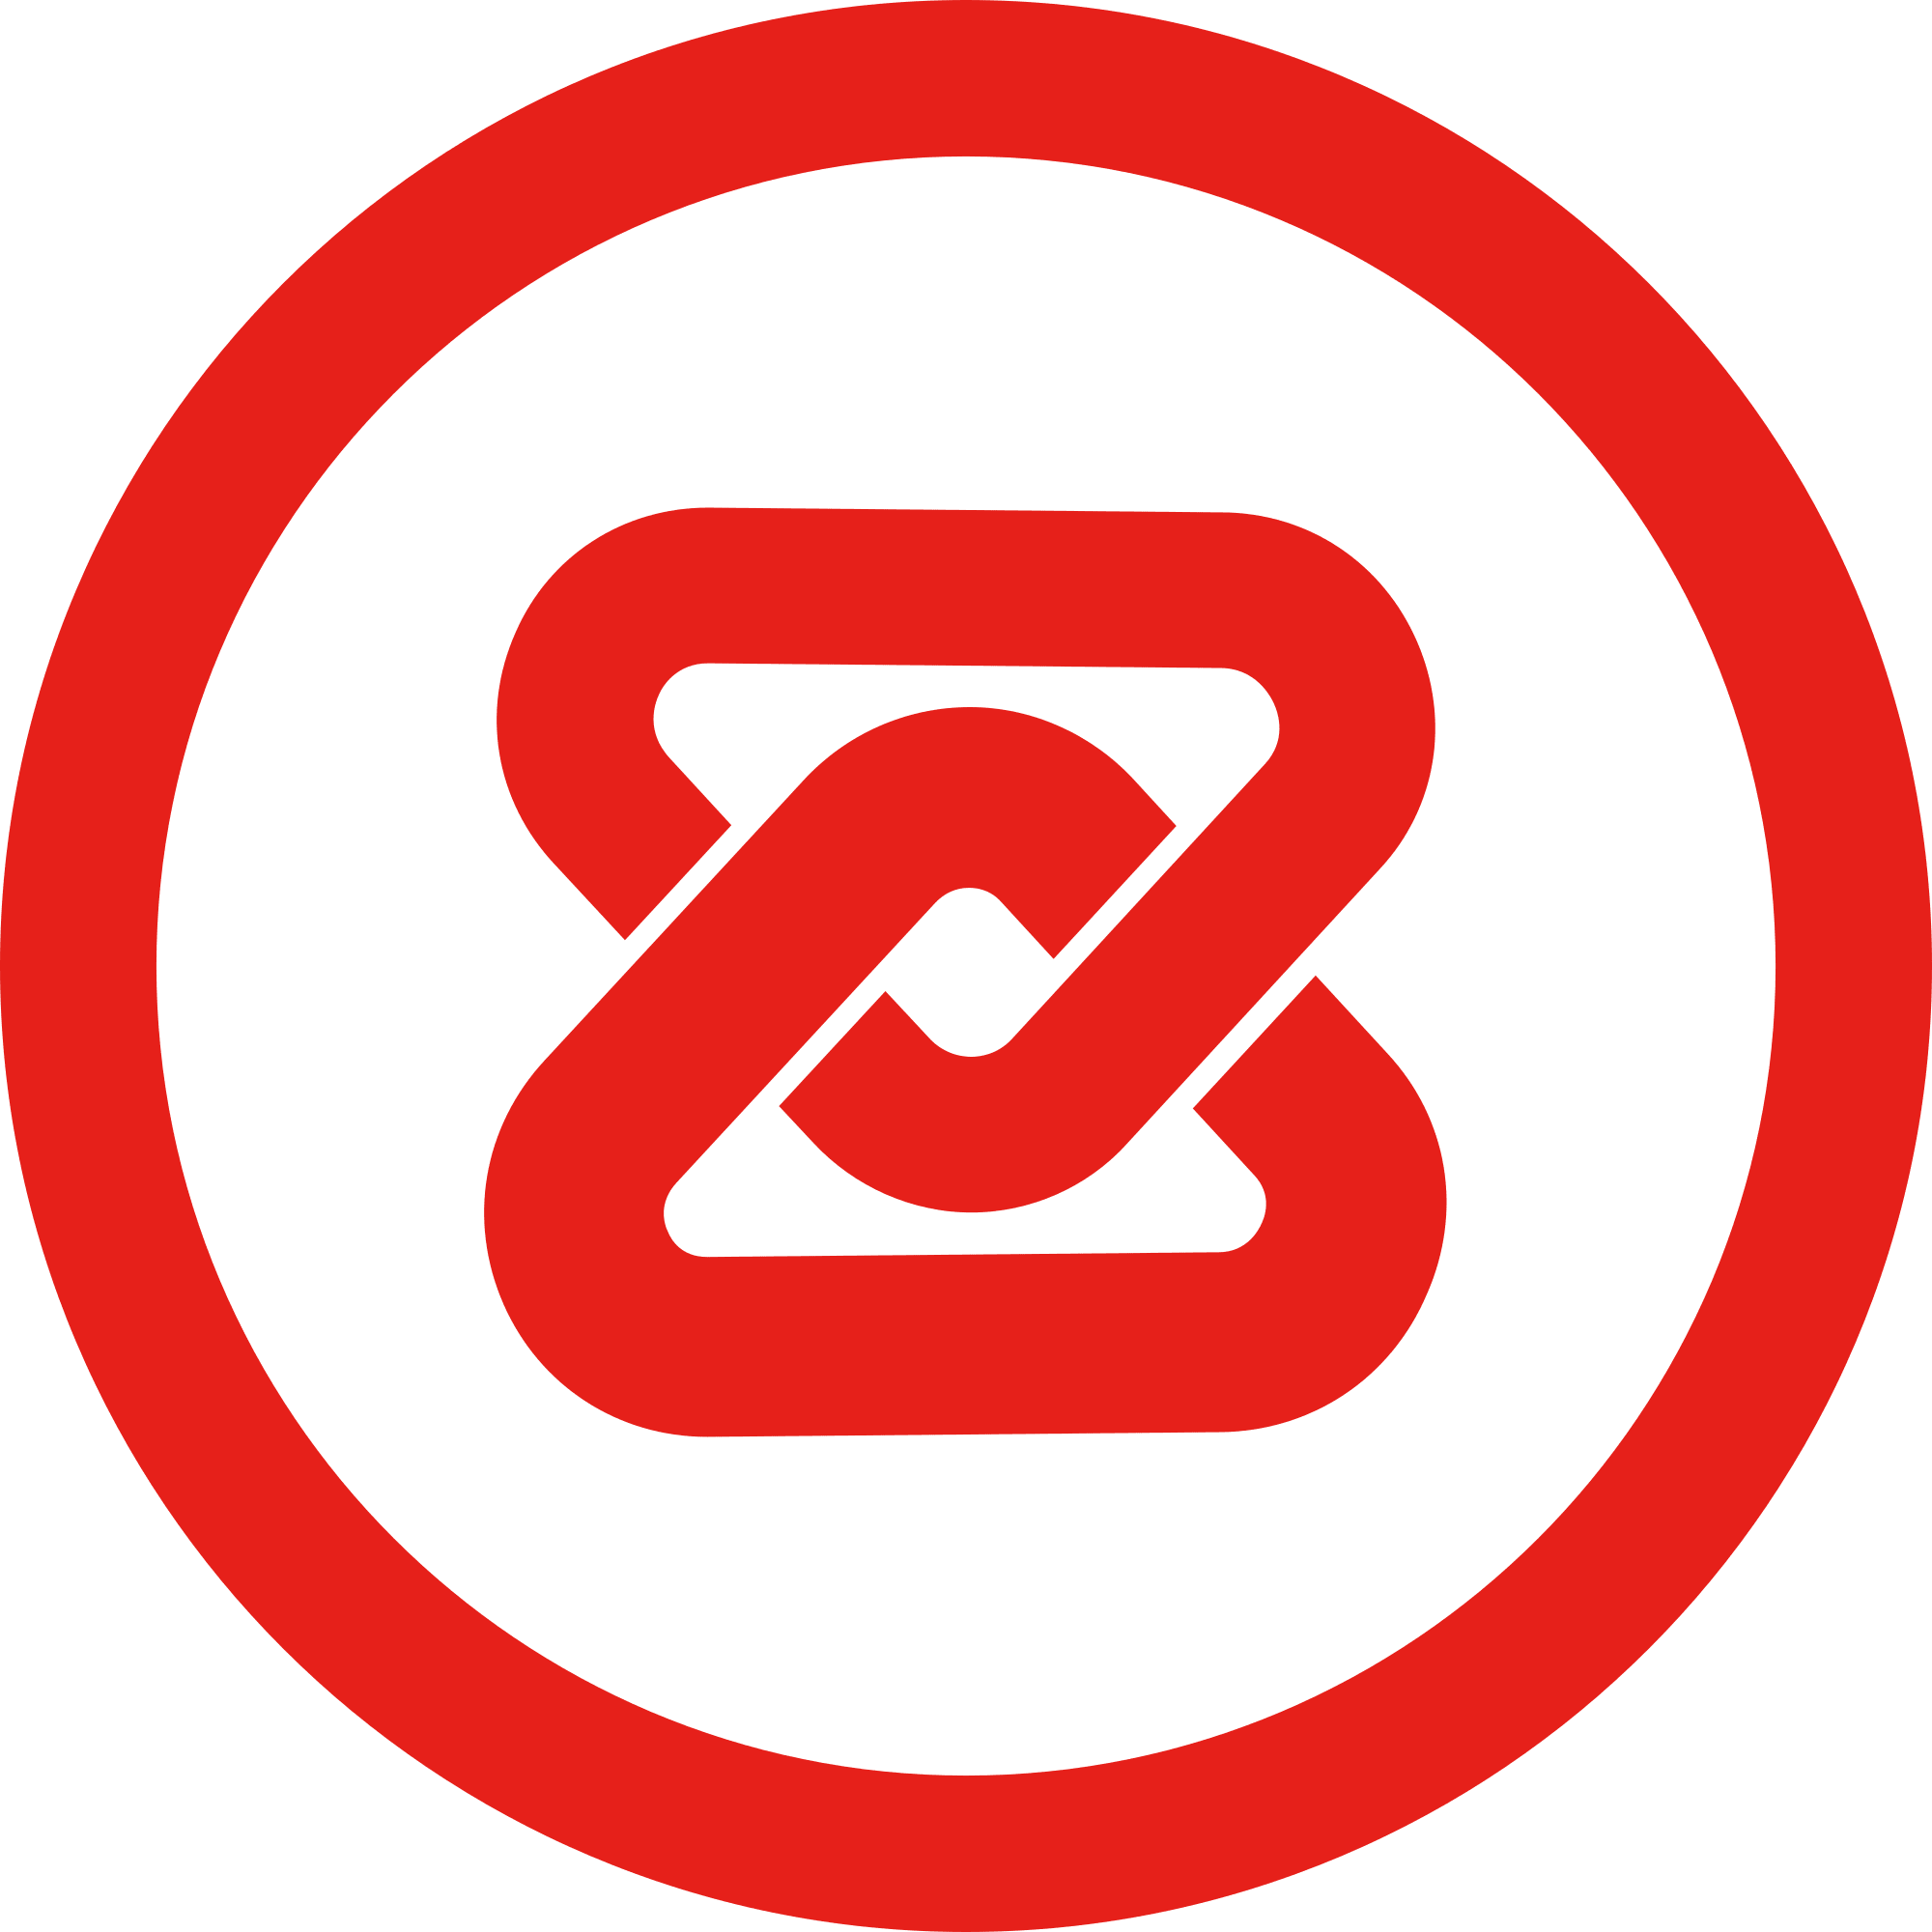 ZB Token logo in png format